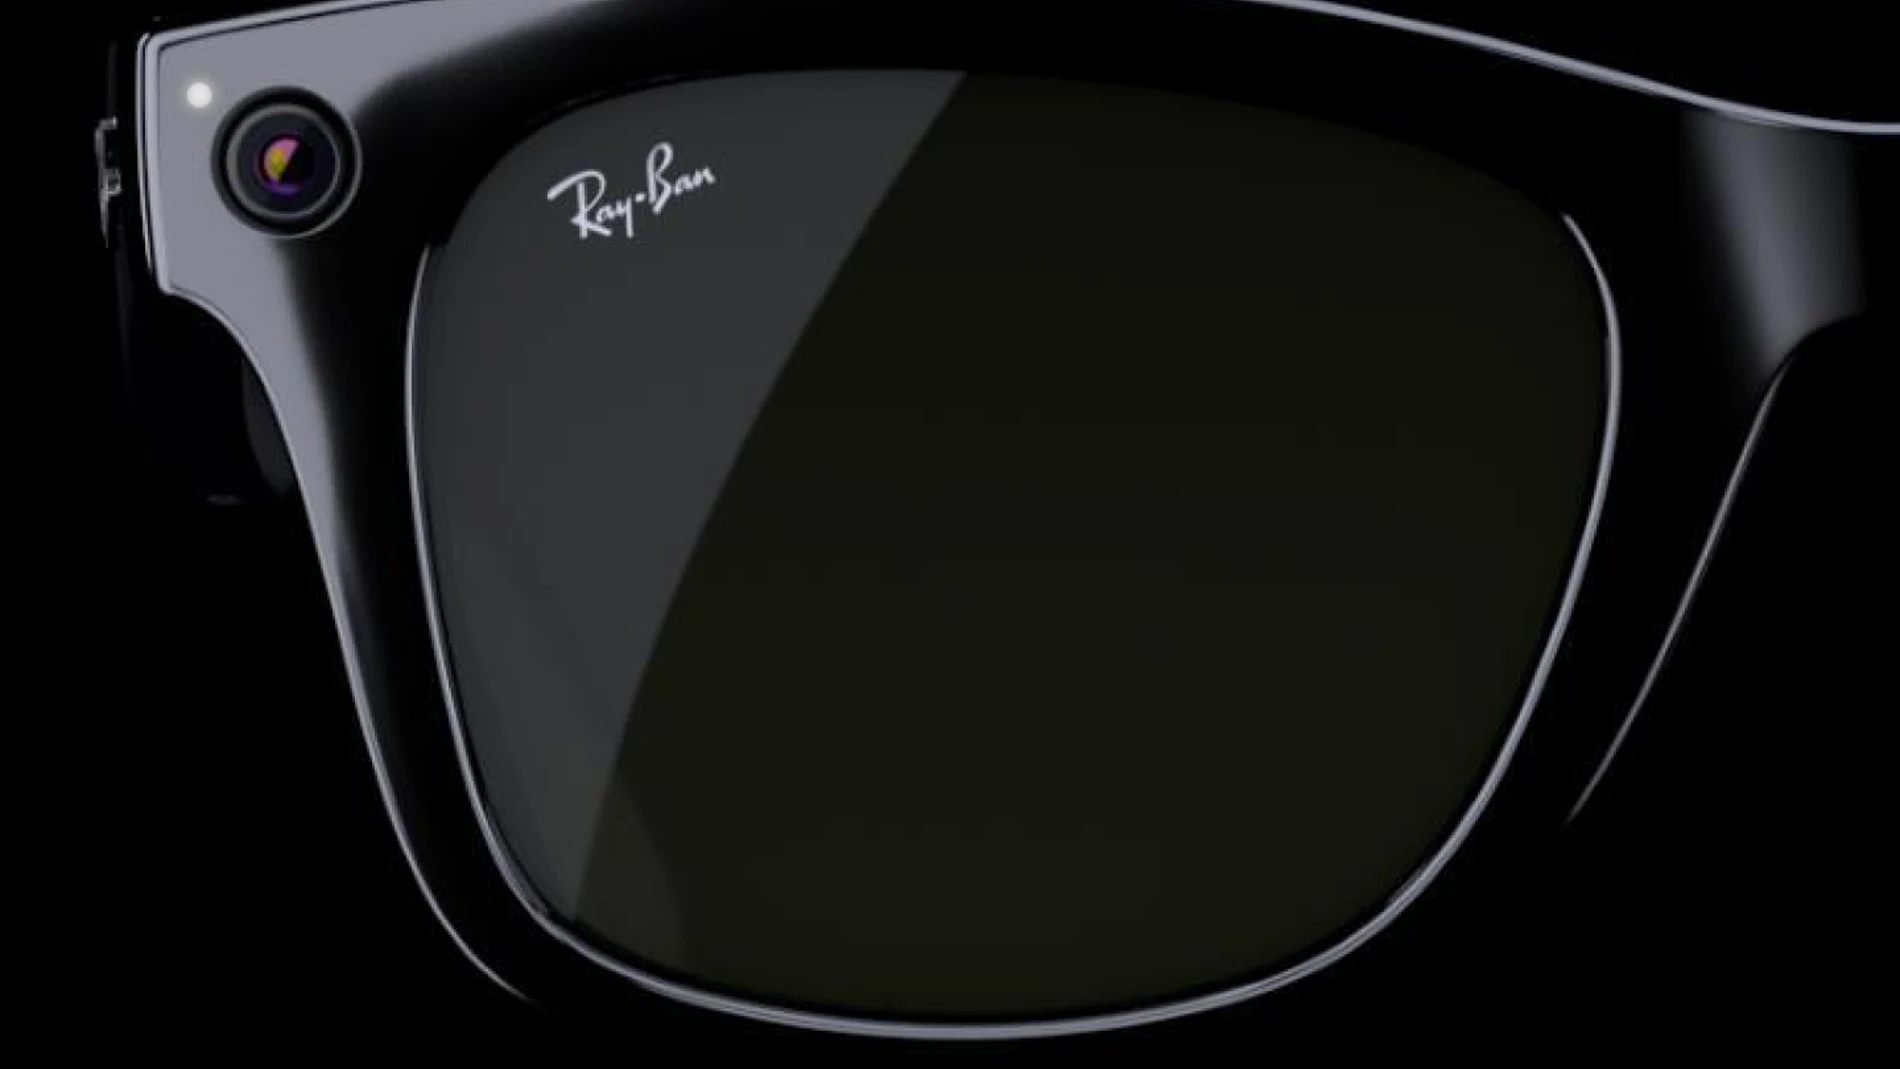 Ray-Ban Stories: Así son las gafas inteligentes con cámaras de Facebook